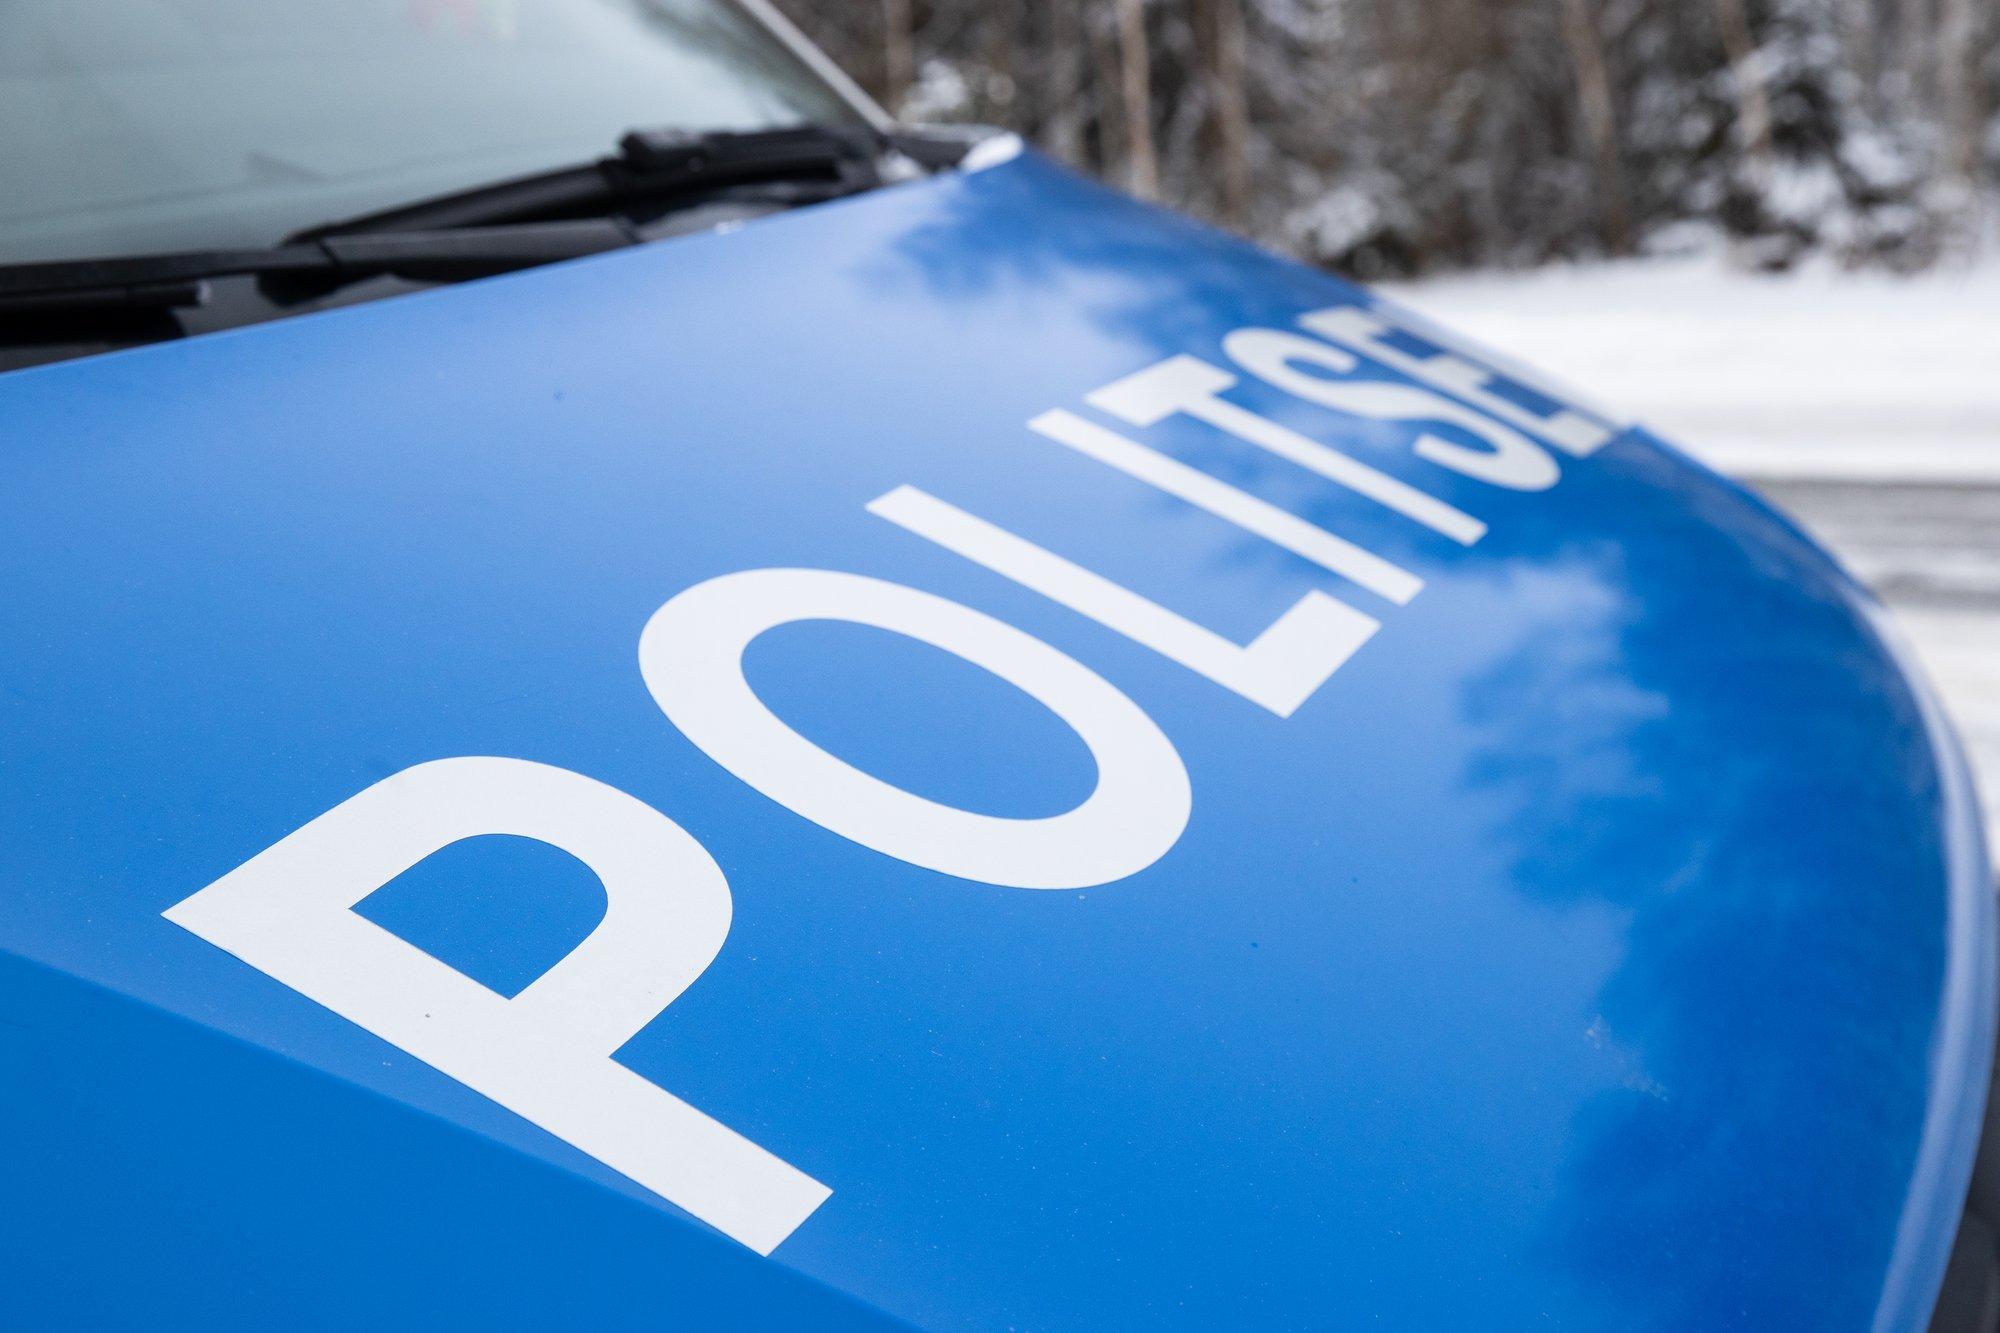 Полиция ищет свидетелей ДТП в Нарве